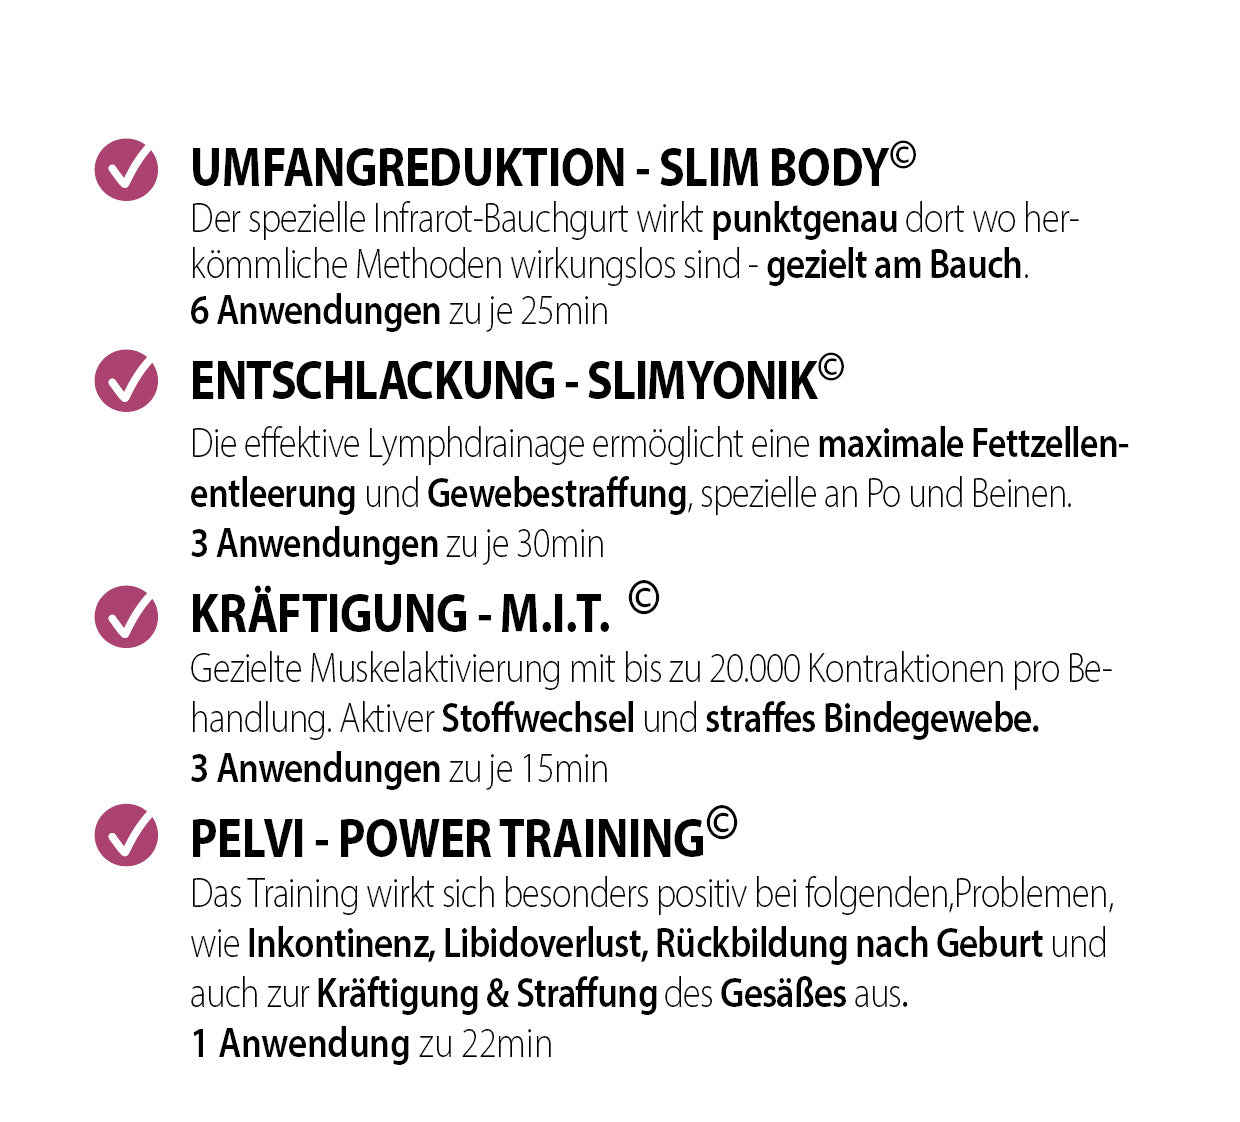 "Figur-Paket" Flacher Bauch & straffe Haut in Graz & Raaba